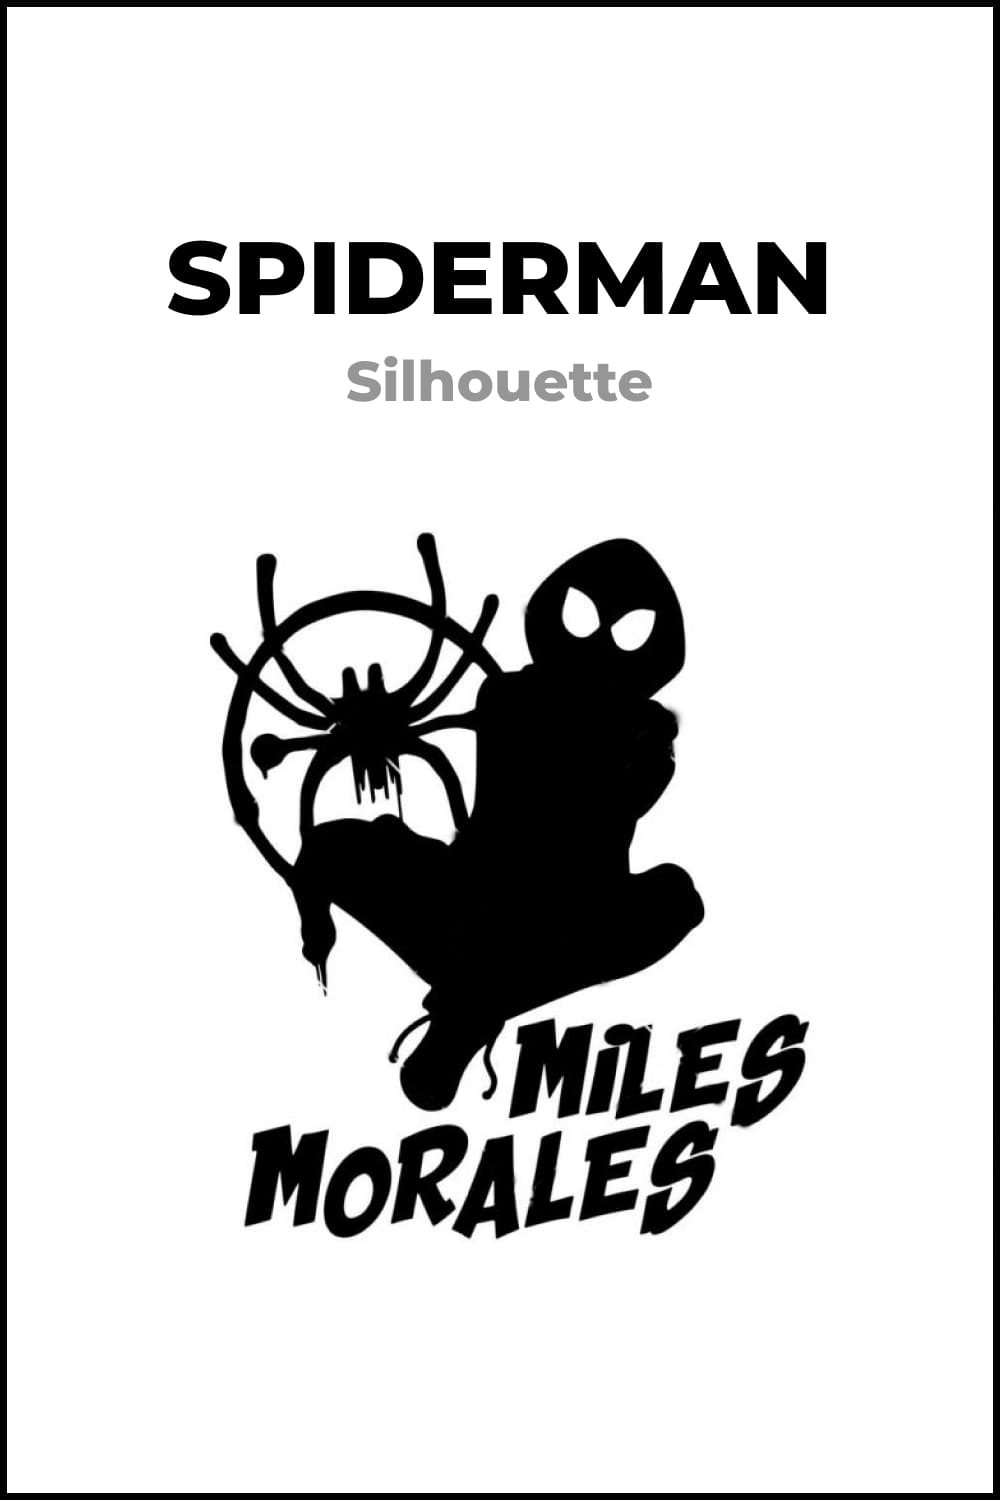 Silhouette of Spiderman Miles Morales.